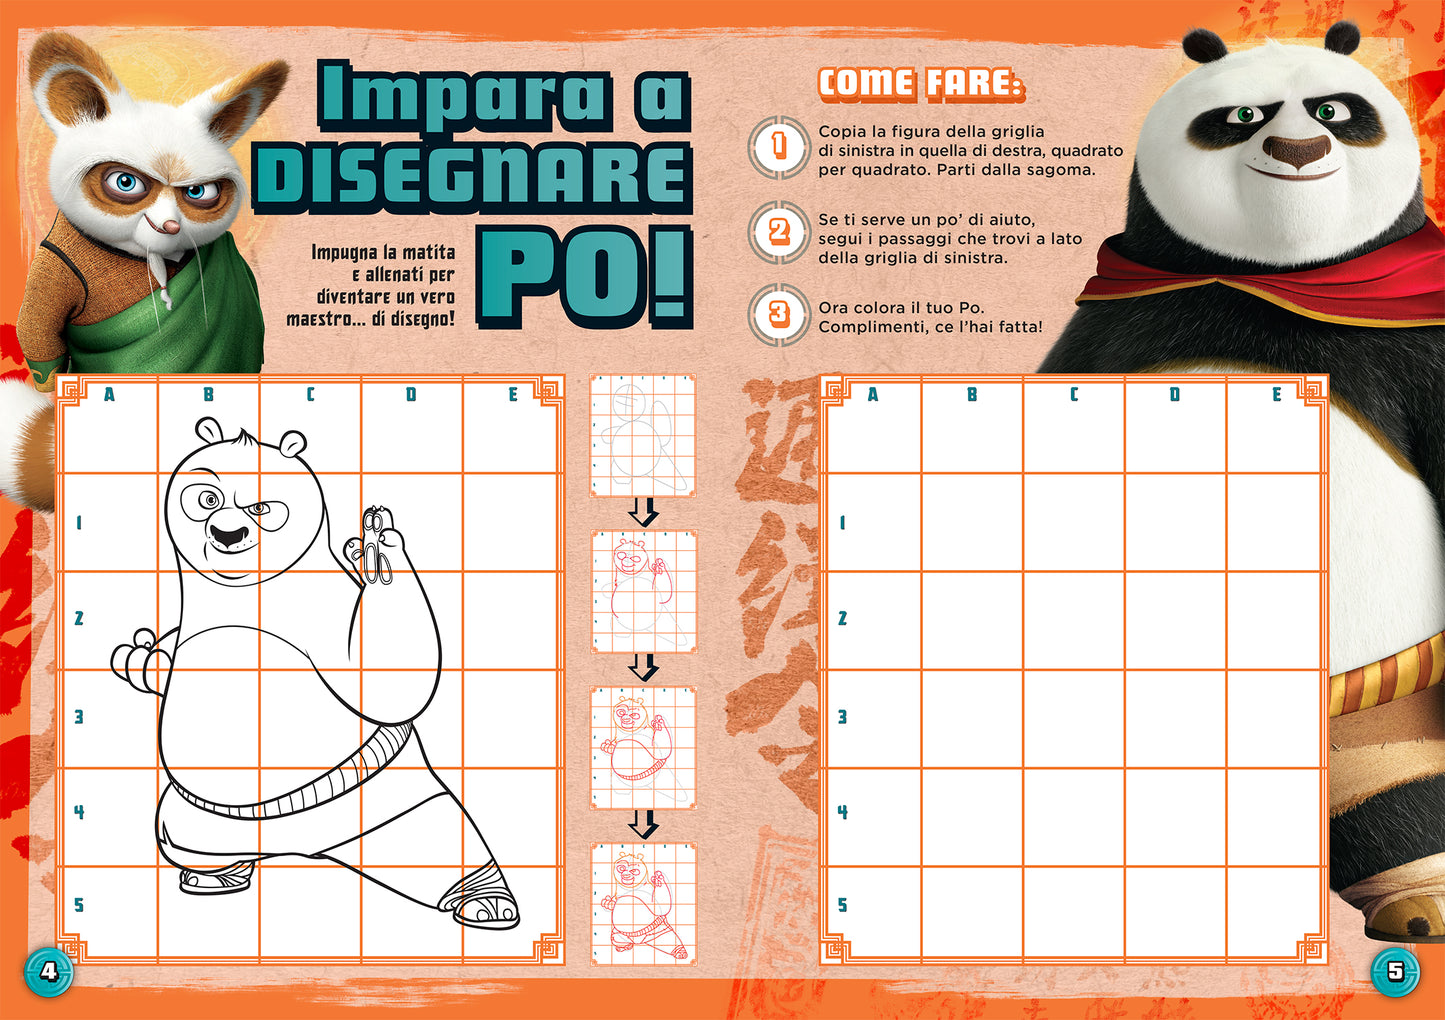 Kung Fu Panda 4. Scenari sticker. Avventure Kung Fu